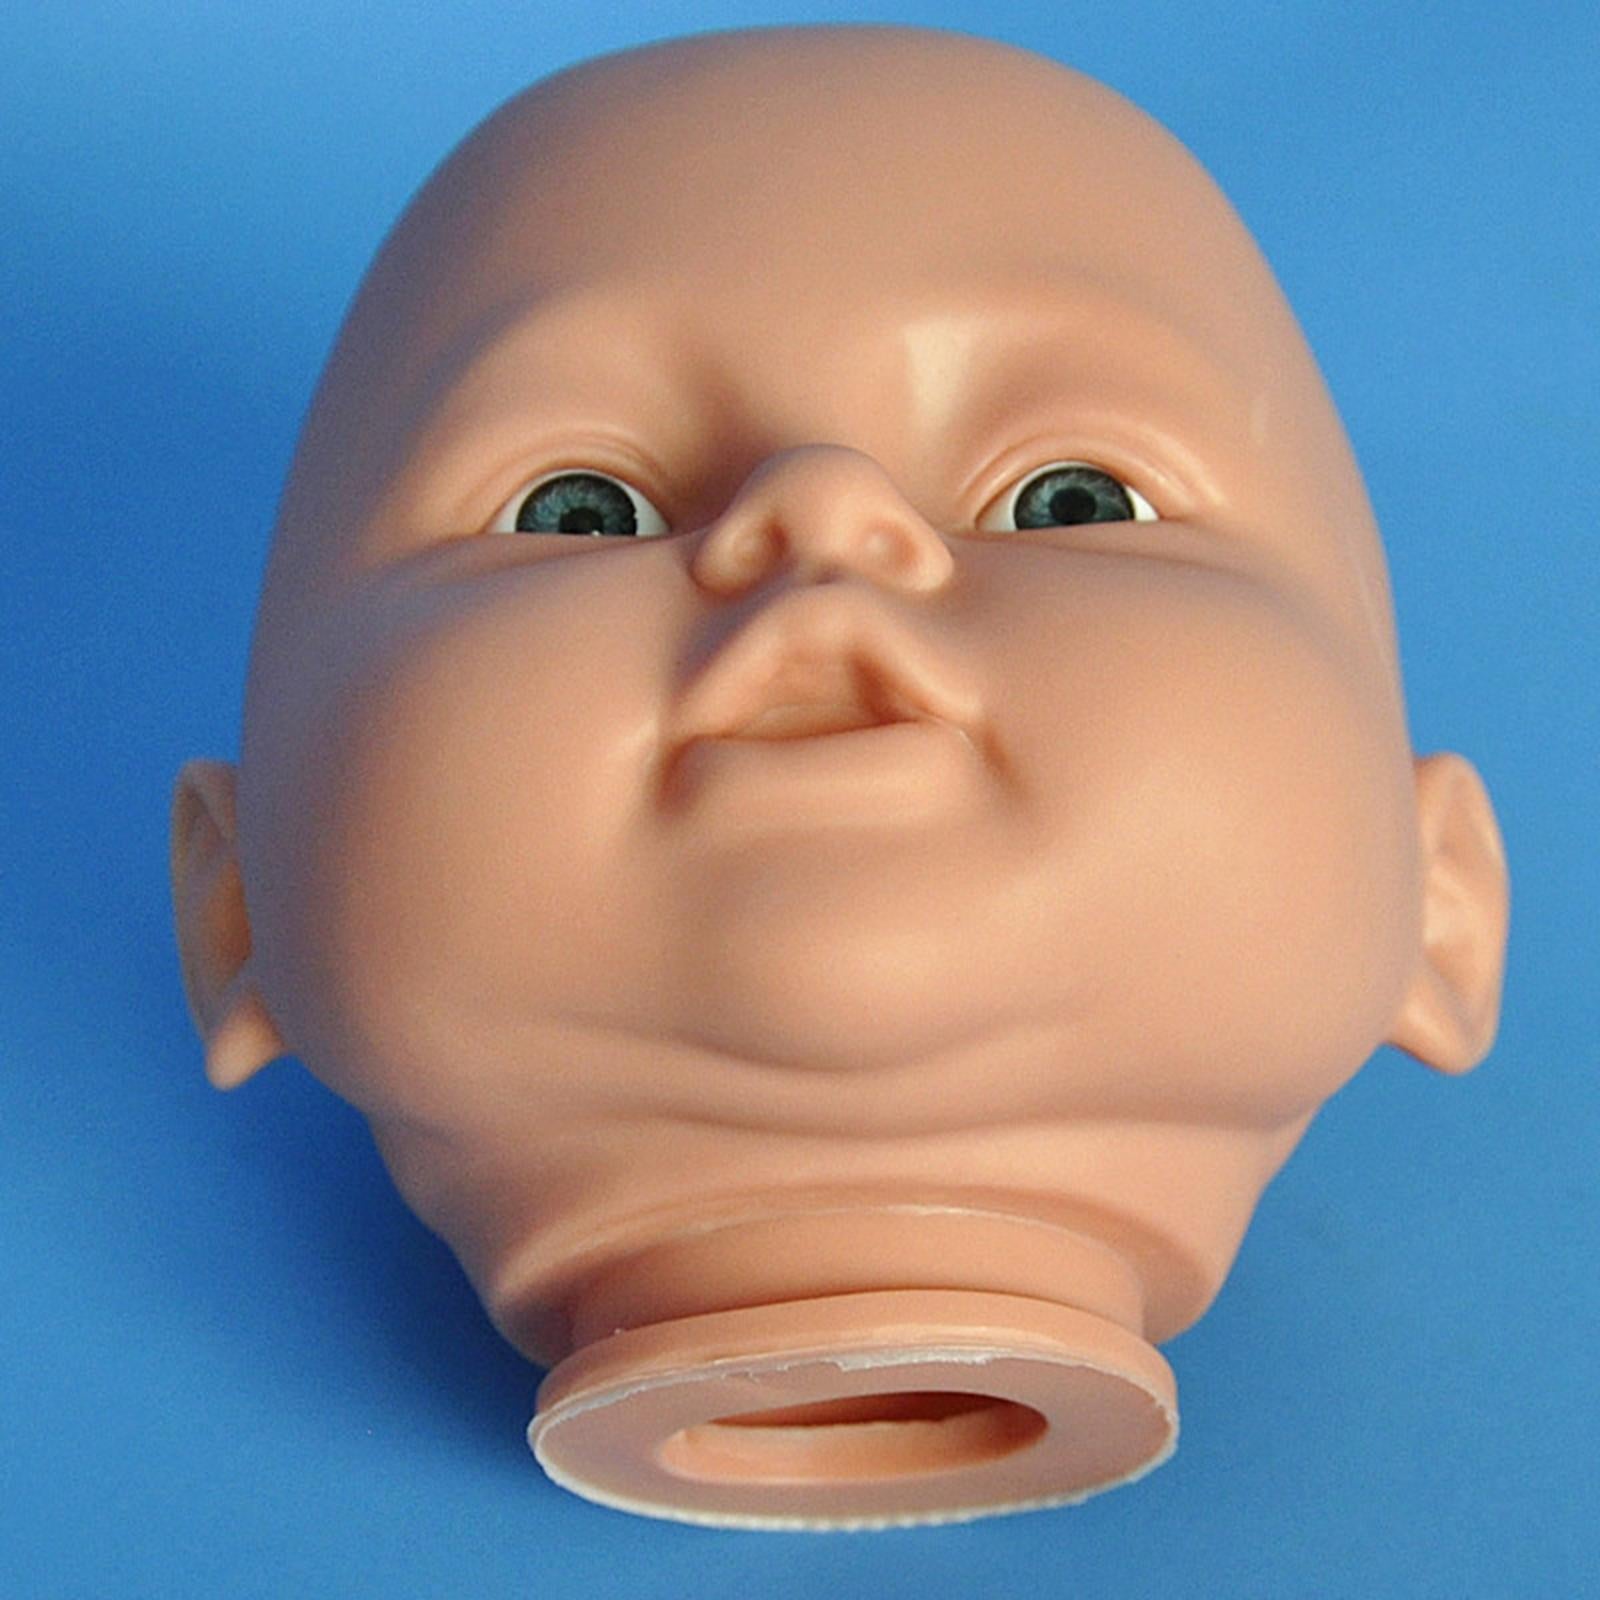 Small Baby Children Mannequin Manikin Body for Wig Hats Display Model Boy